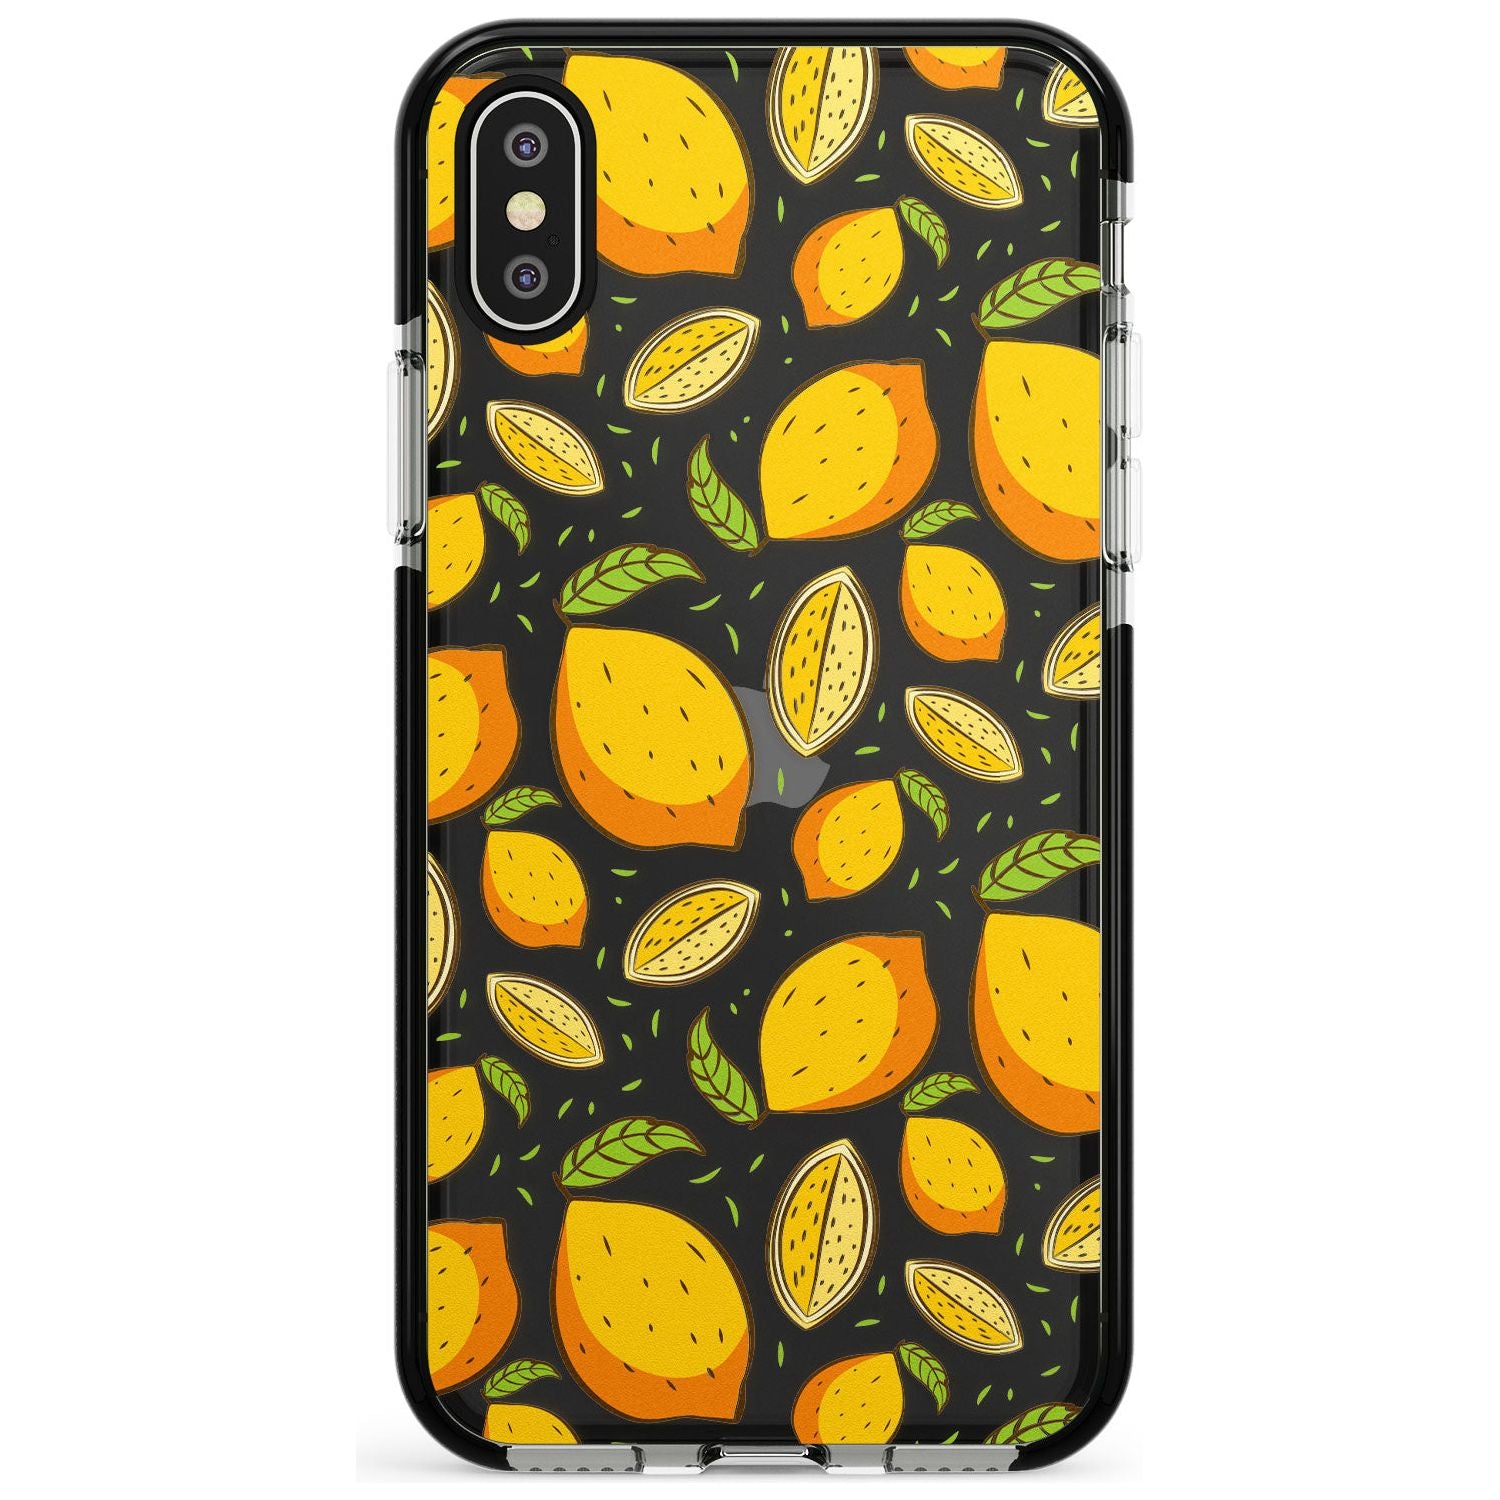 Lemon Pattern Black Impact Phone Case for iPhone X XS Max XR